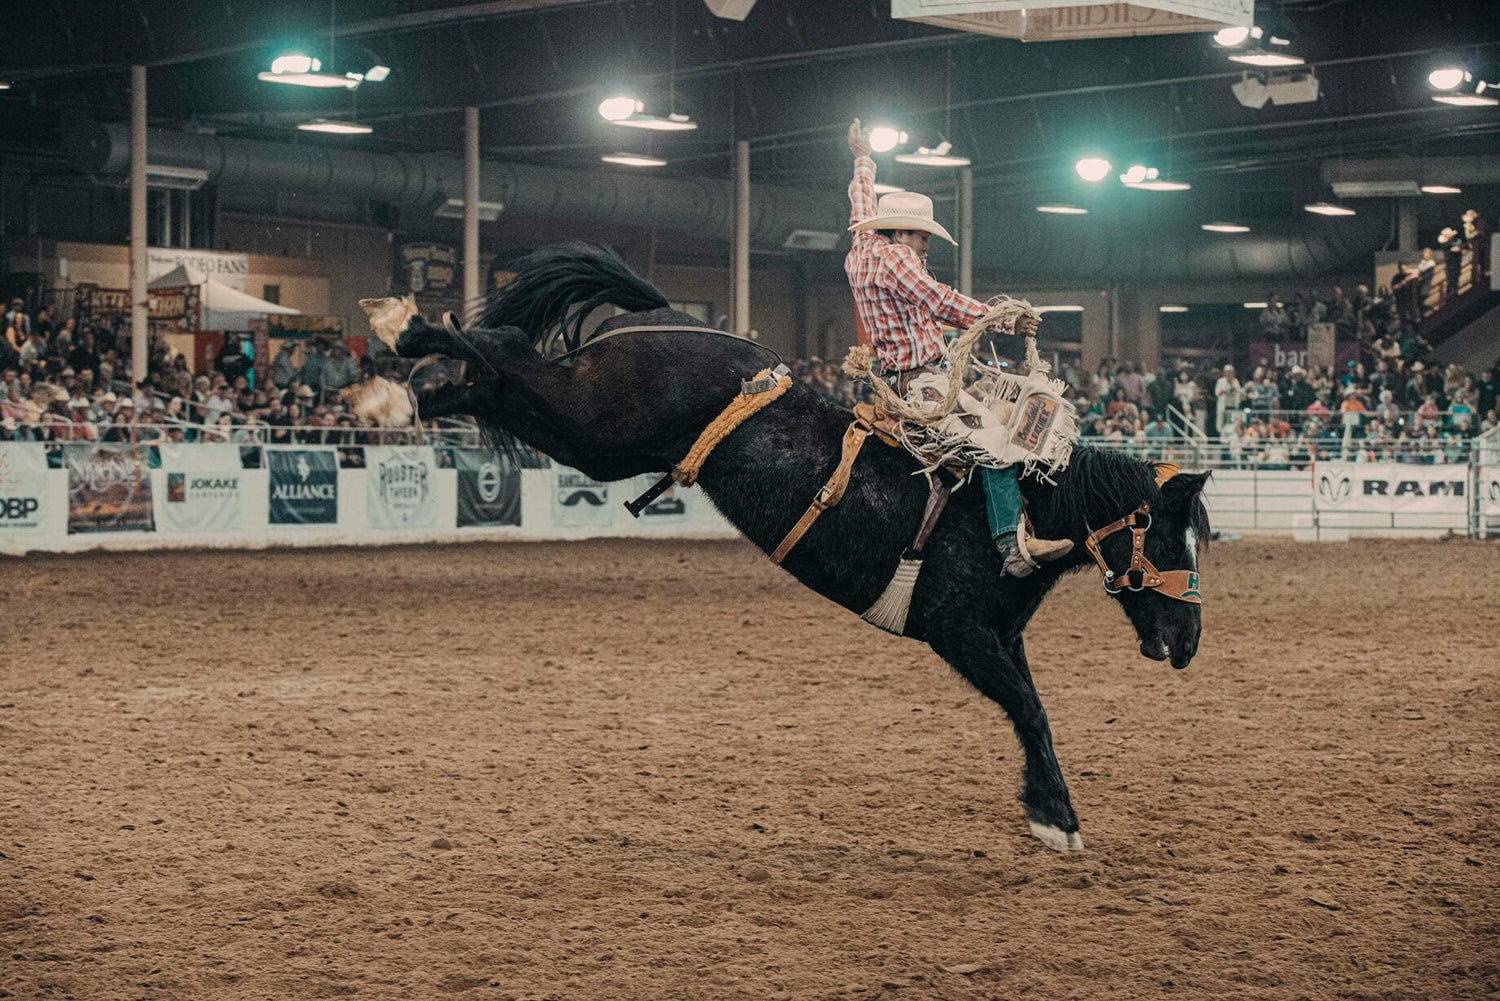 Cowboy riding a horse at a rodeo show